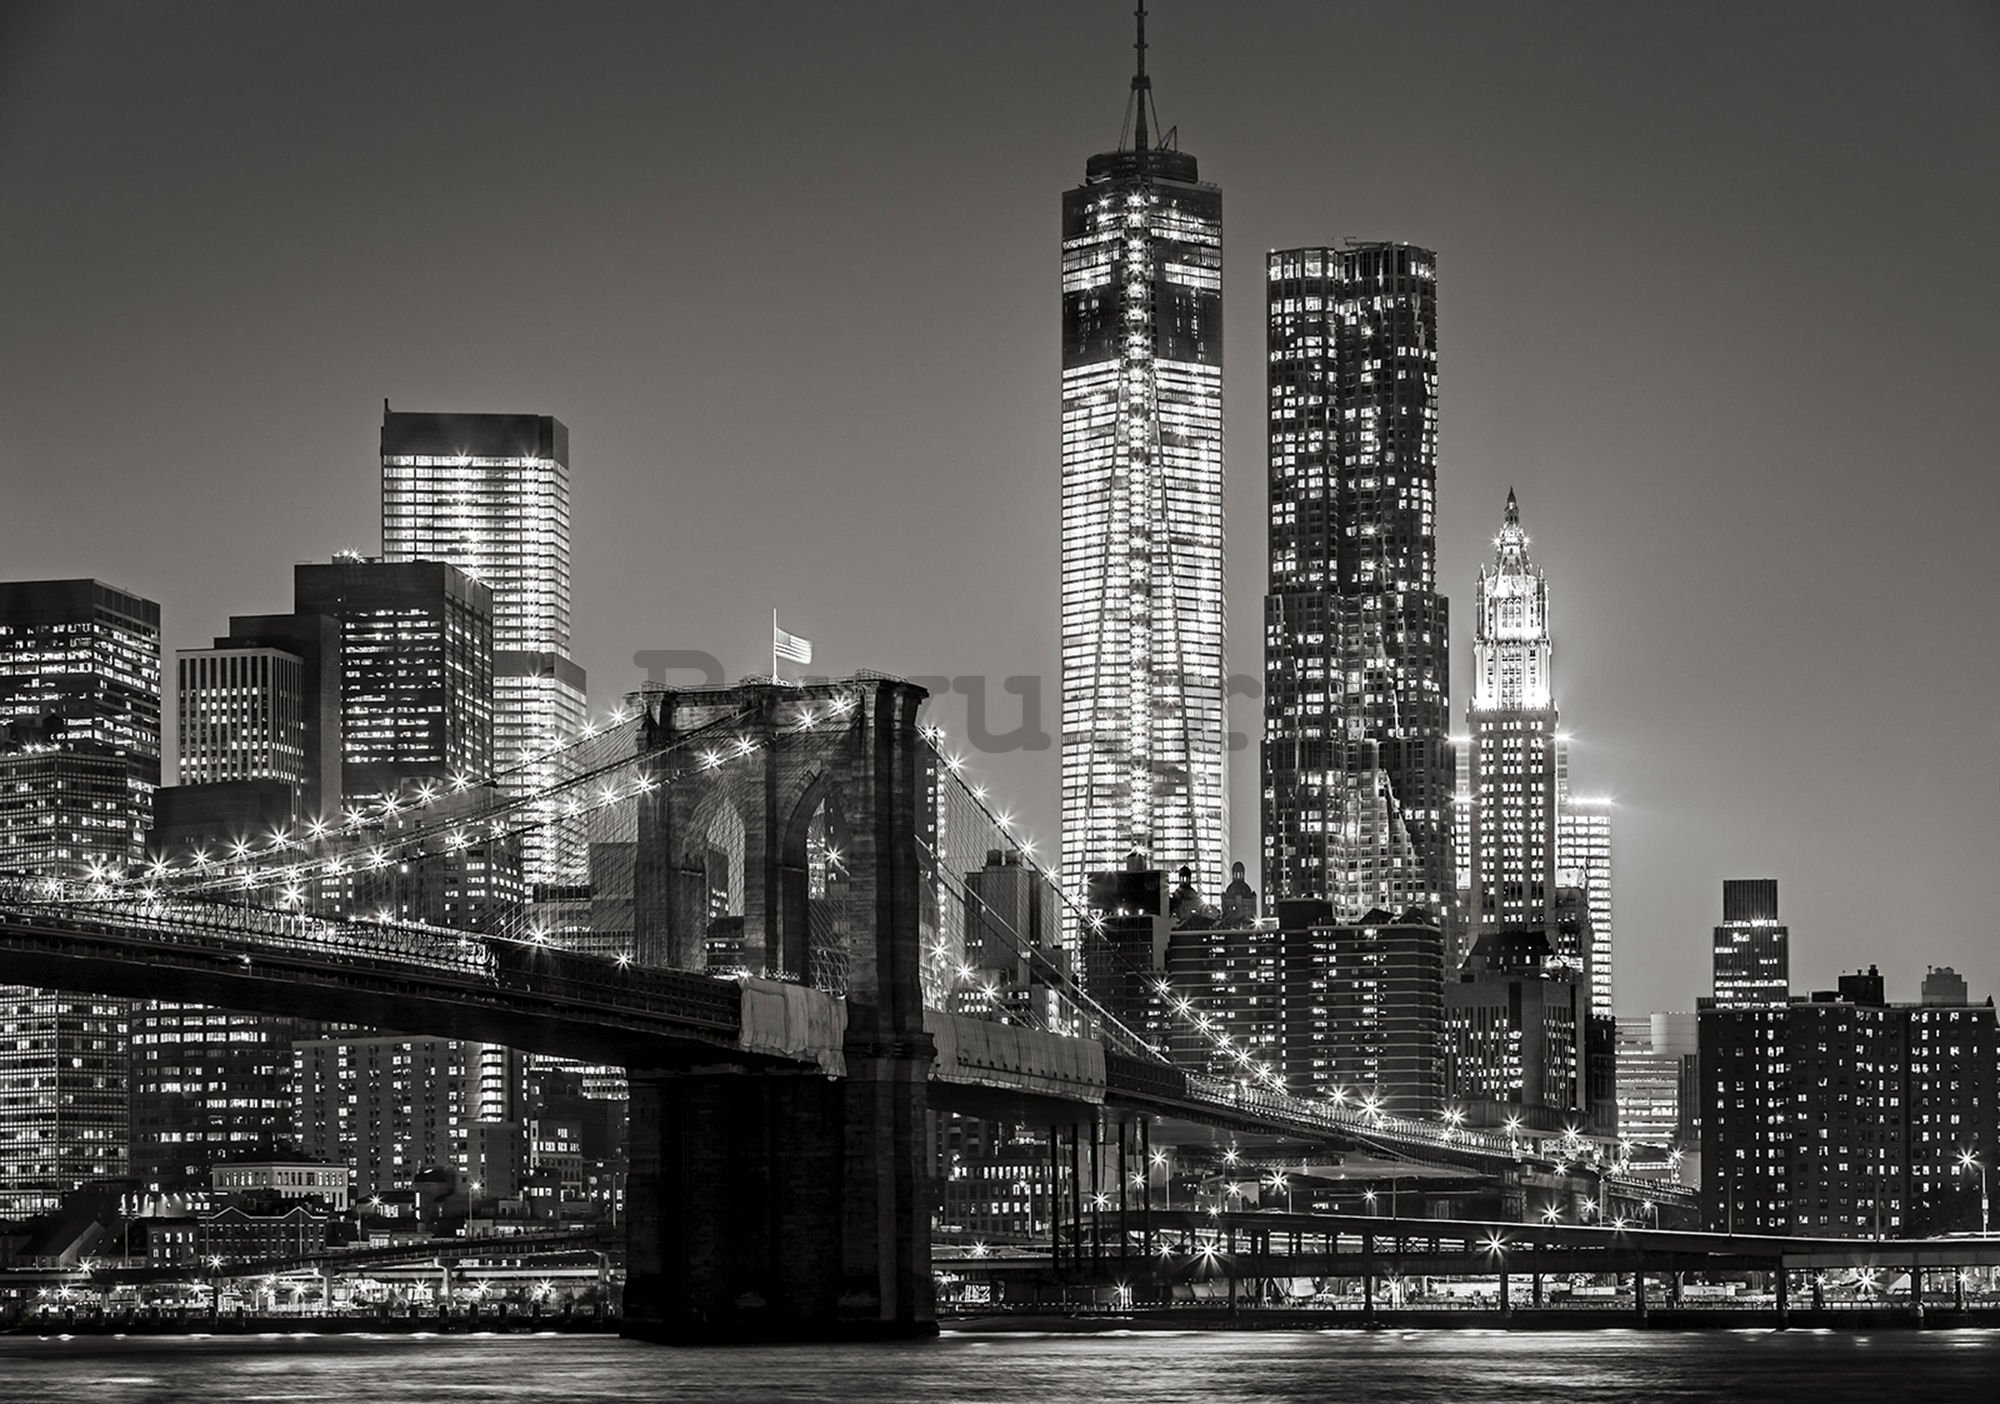 Fototapet vlies: Brooklyn Bridge (4) - 460x300 cm